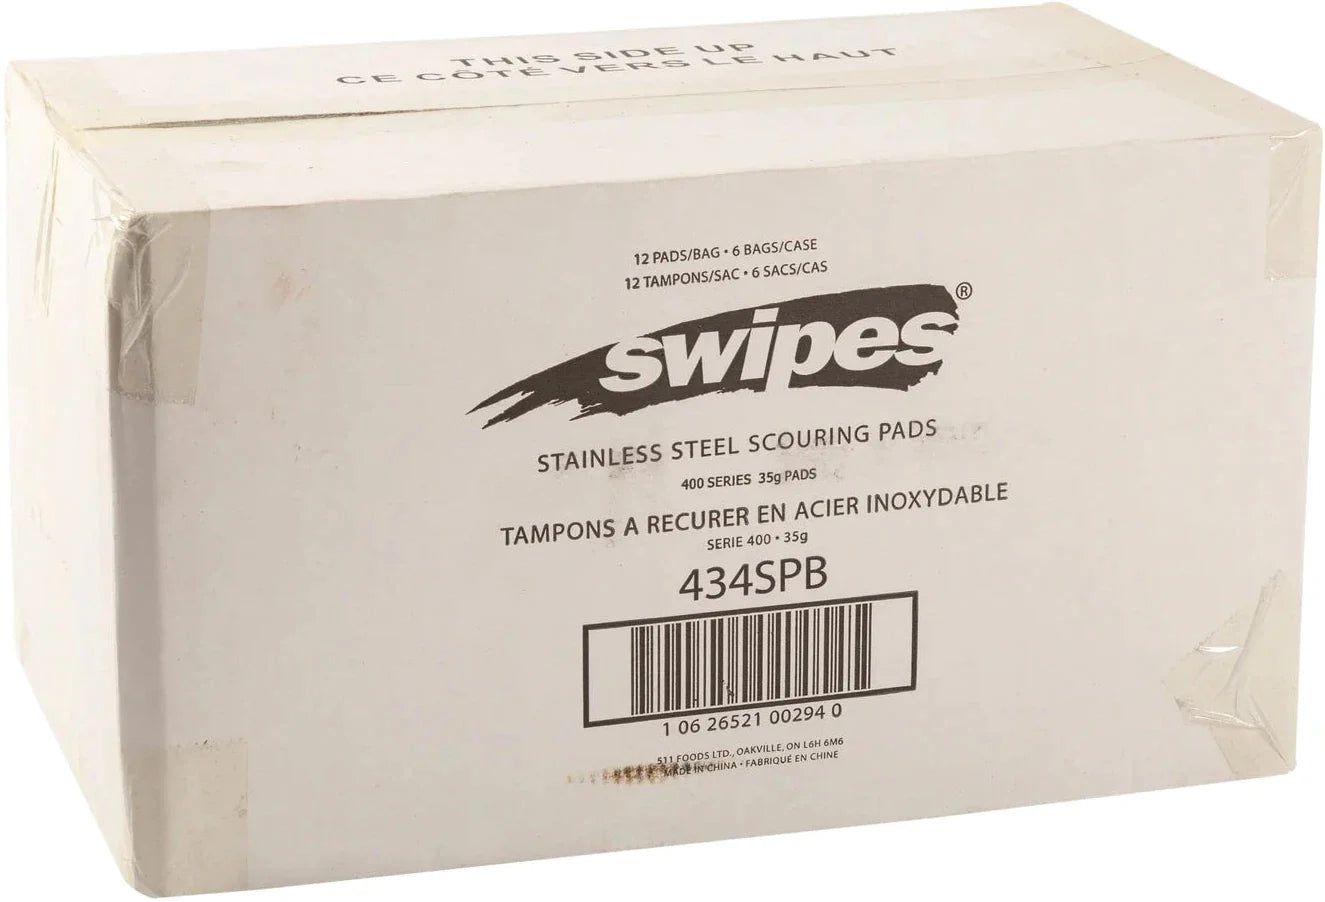 Swipes - Stainless Steel Scouring Pads, 12/Pk - 434SPB